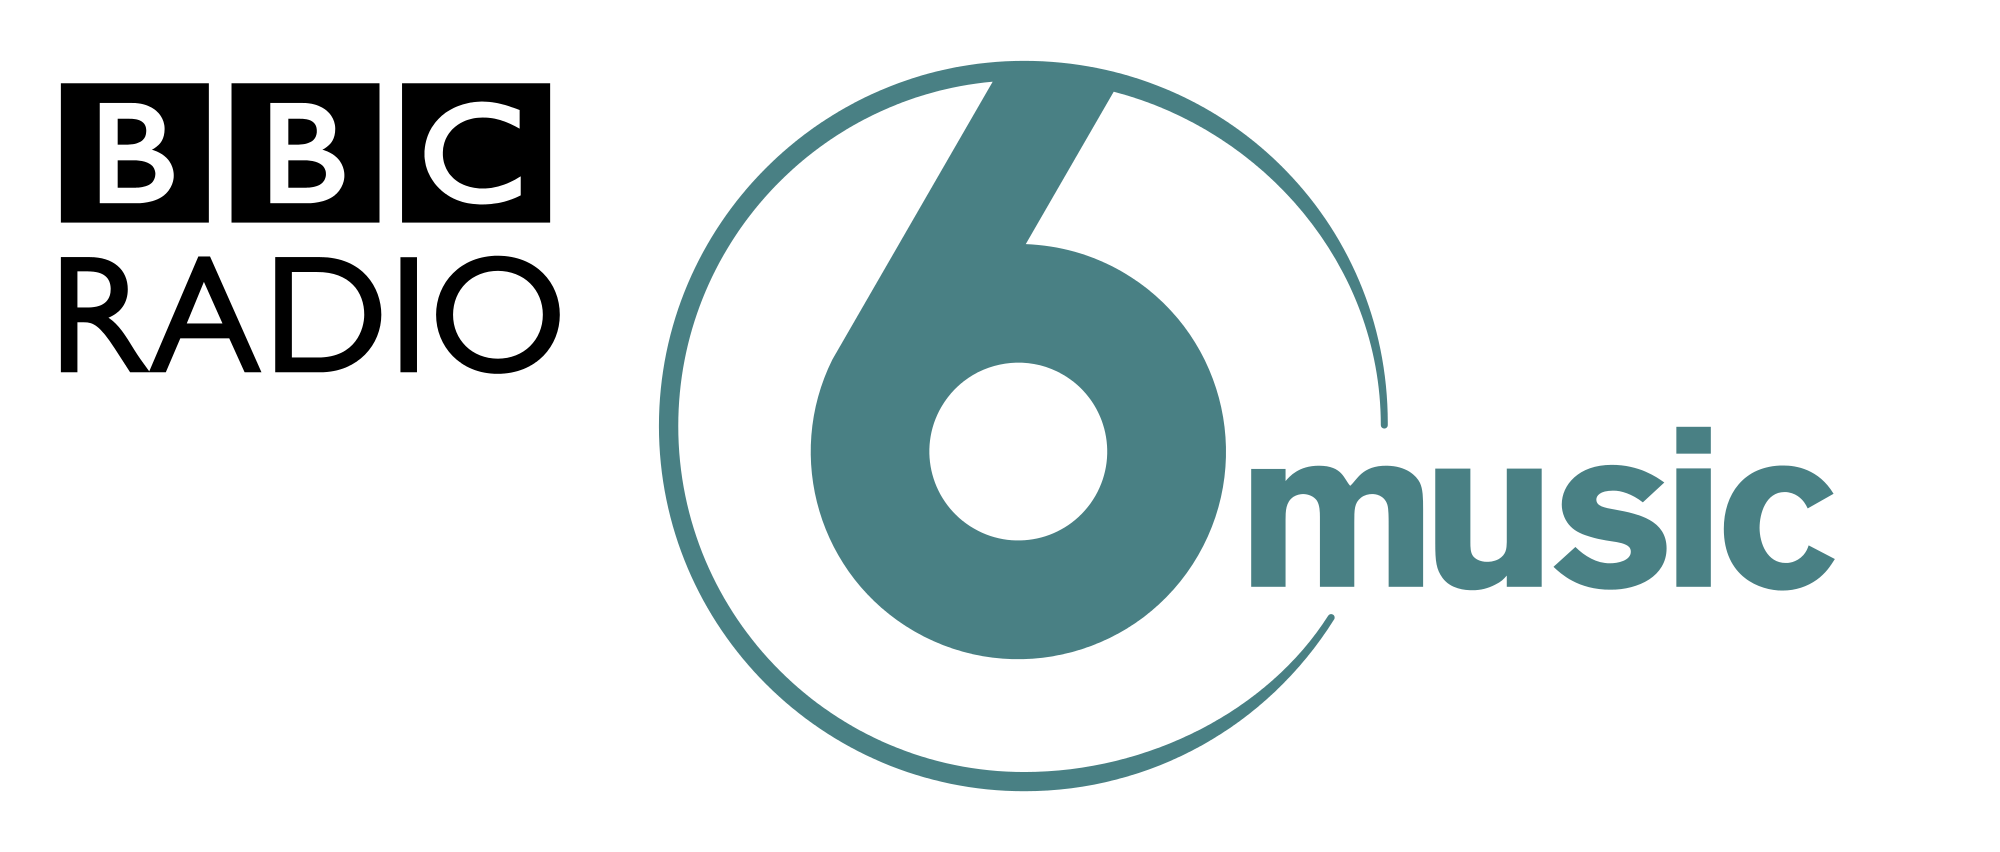 6 Logo - Logo BBC 6 Music.svg